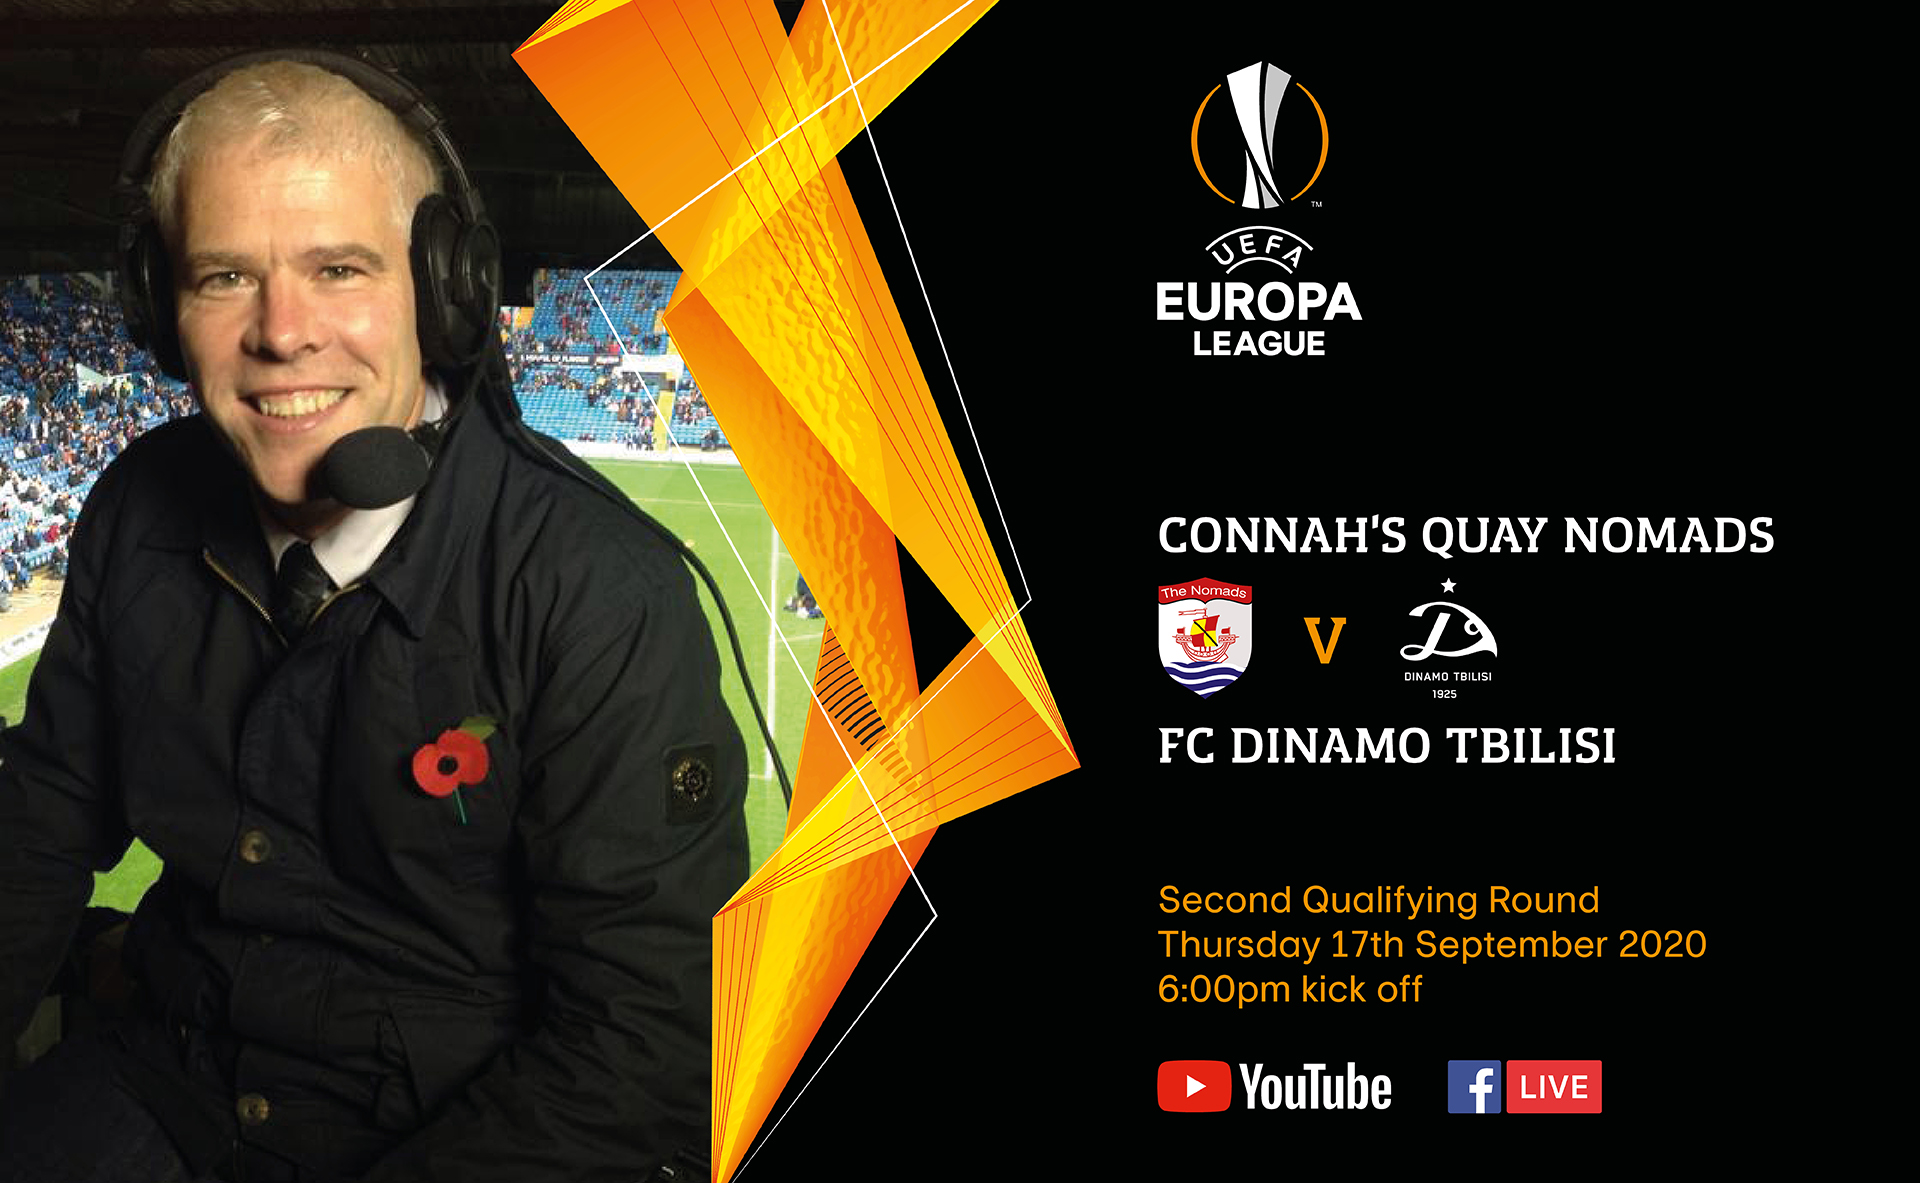 Connah's Quay Nomads vs Dinamo Tbilisi fixture information